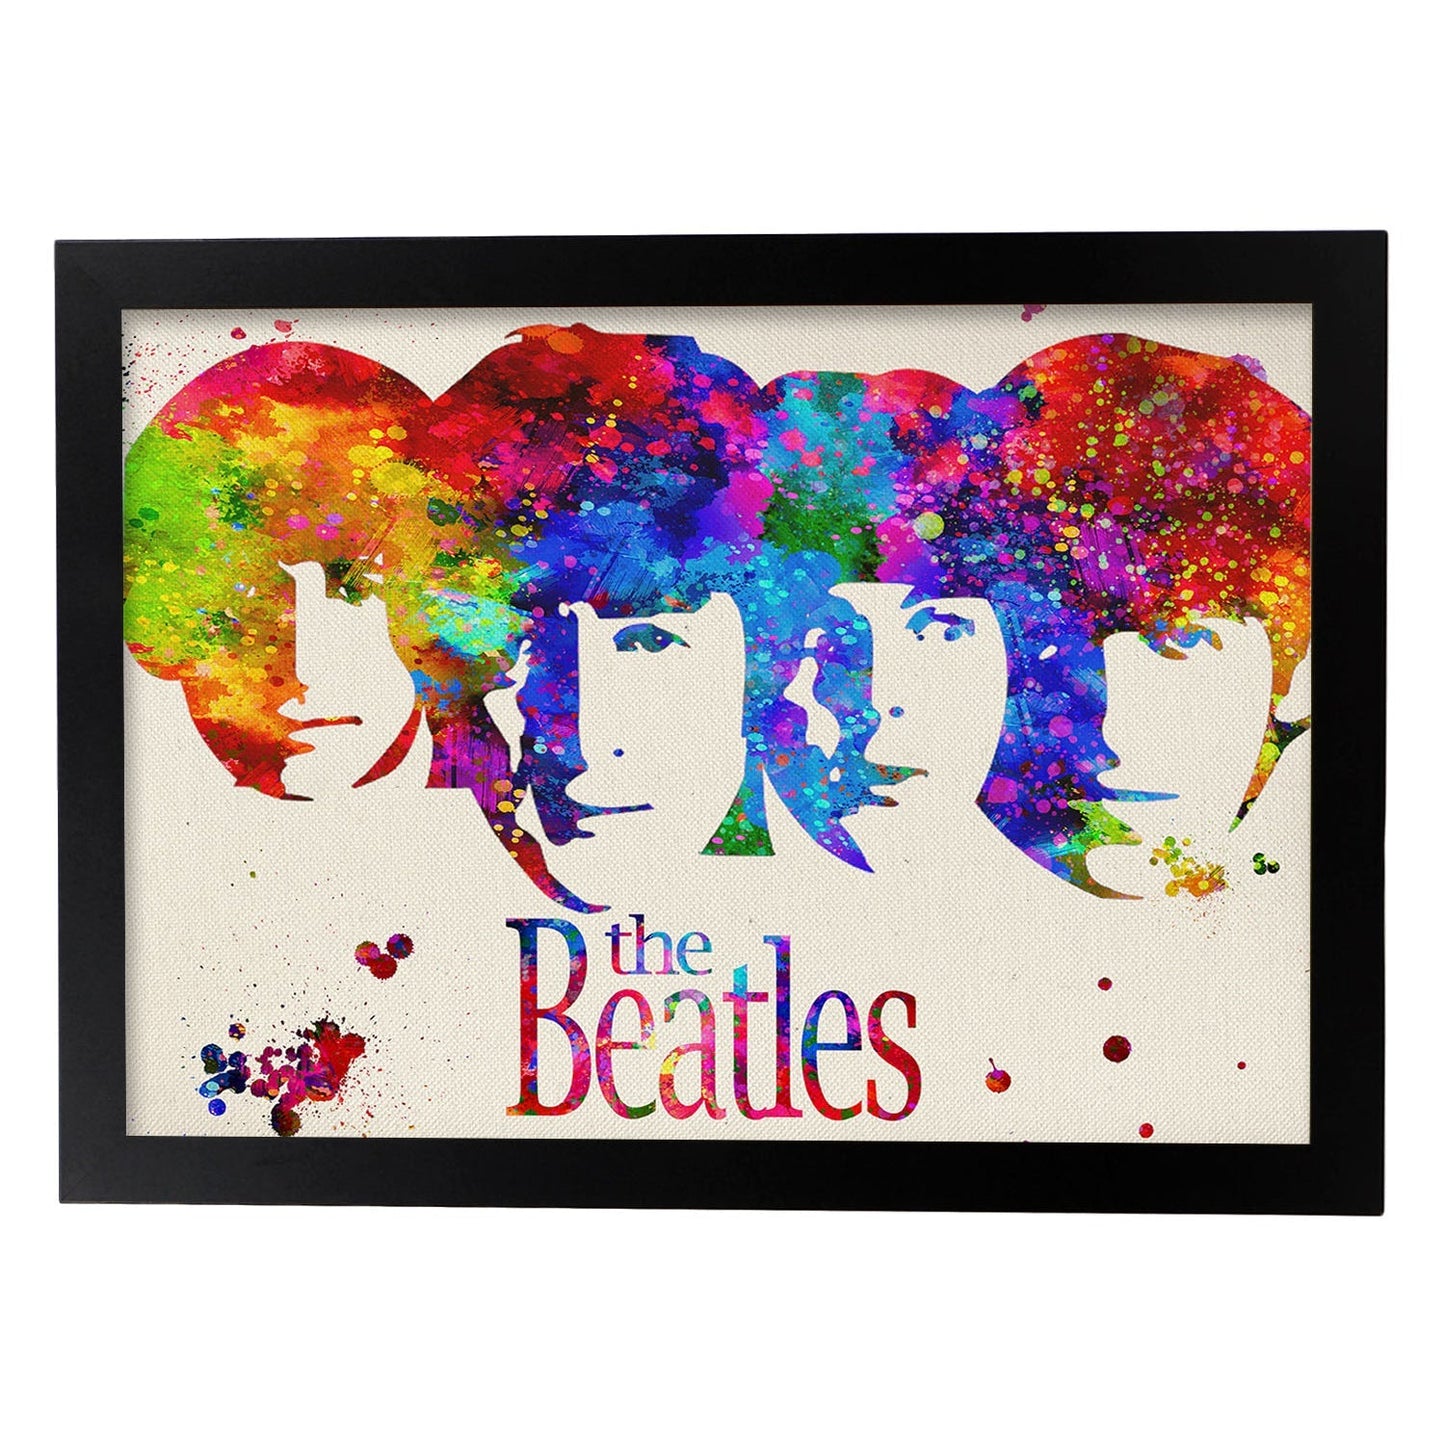 Lámina de la banda de música The Beatles (caras) en Poster estilo explosión de color . Papel 250 gr alta calidad.-Artwork-Nacnic-A4-Marco Negro-Nacnic Estudio SL